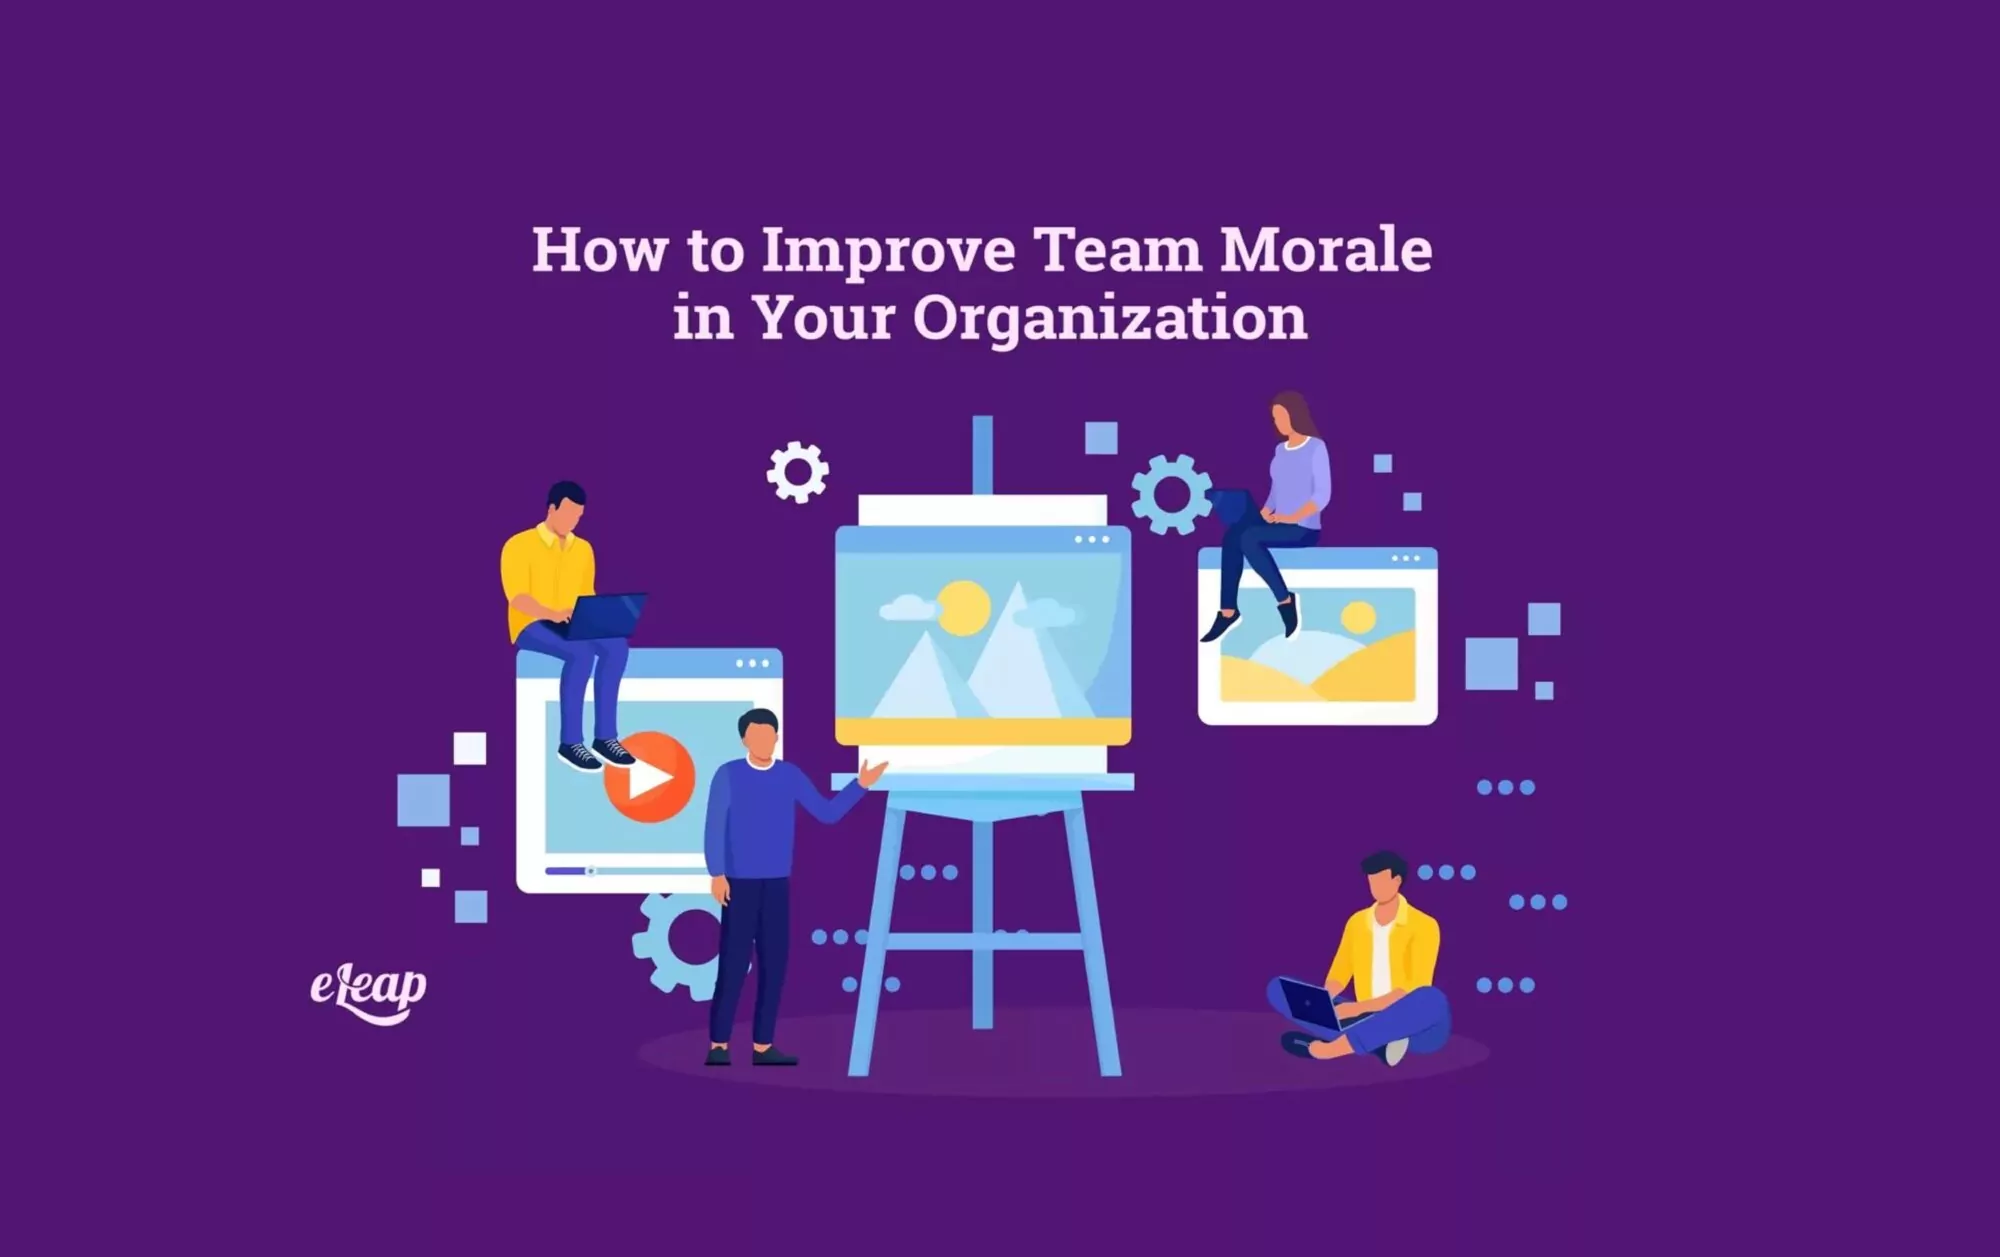 Team Morale